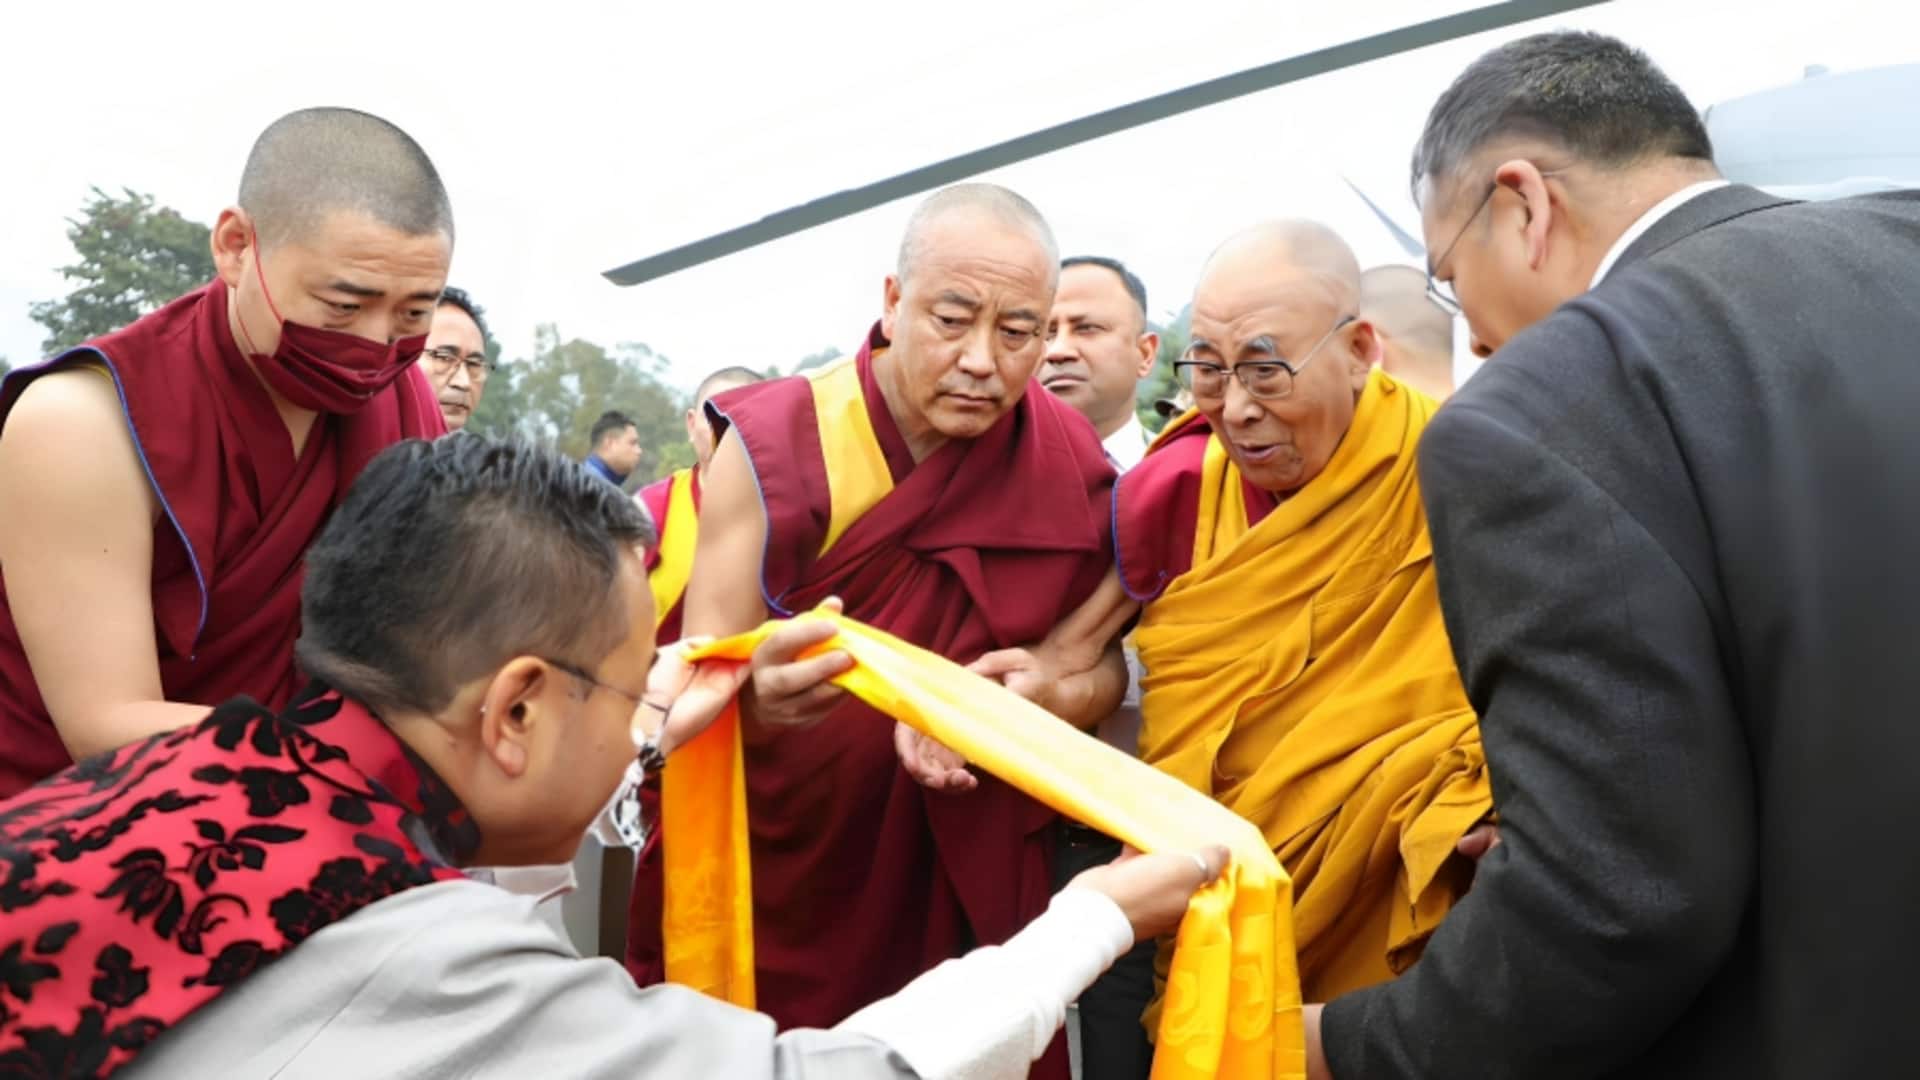 तिब्बती धर्मगुरु दलाई लामा 13 साल बाद सिक्किम की यात्रा पर पहुंचे, मुख्यमंत्री ने किया स्वागत